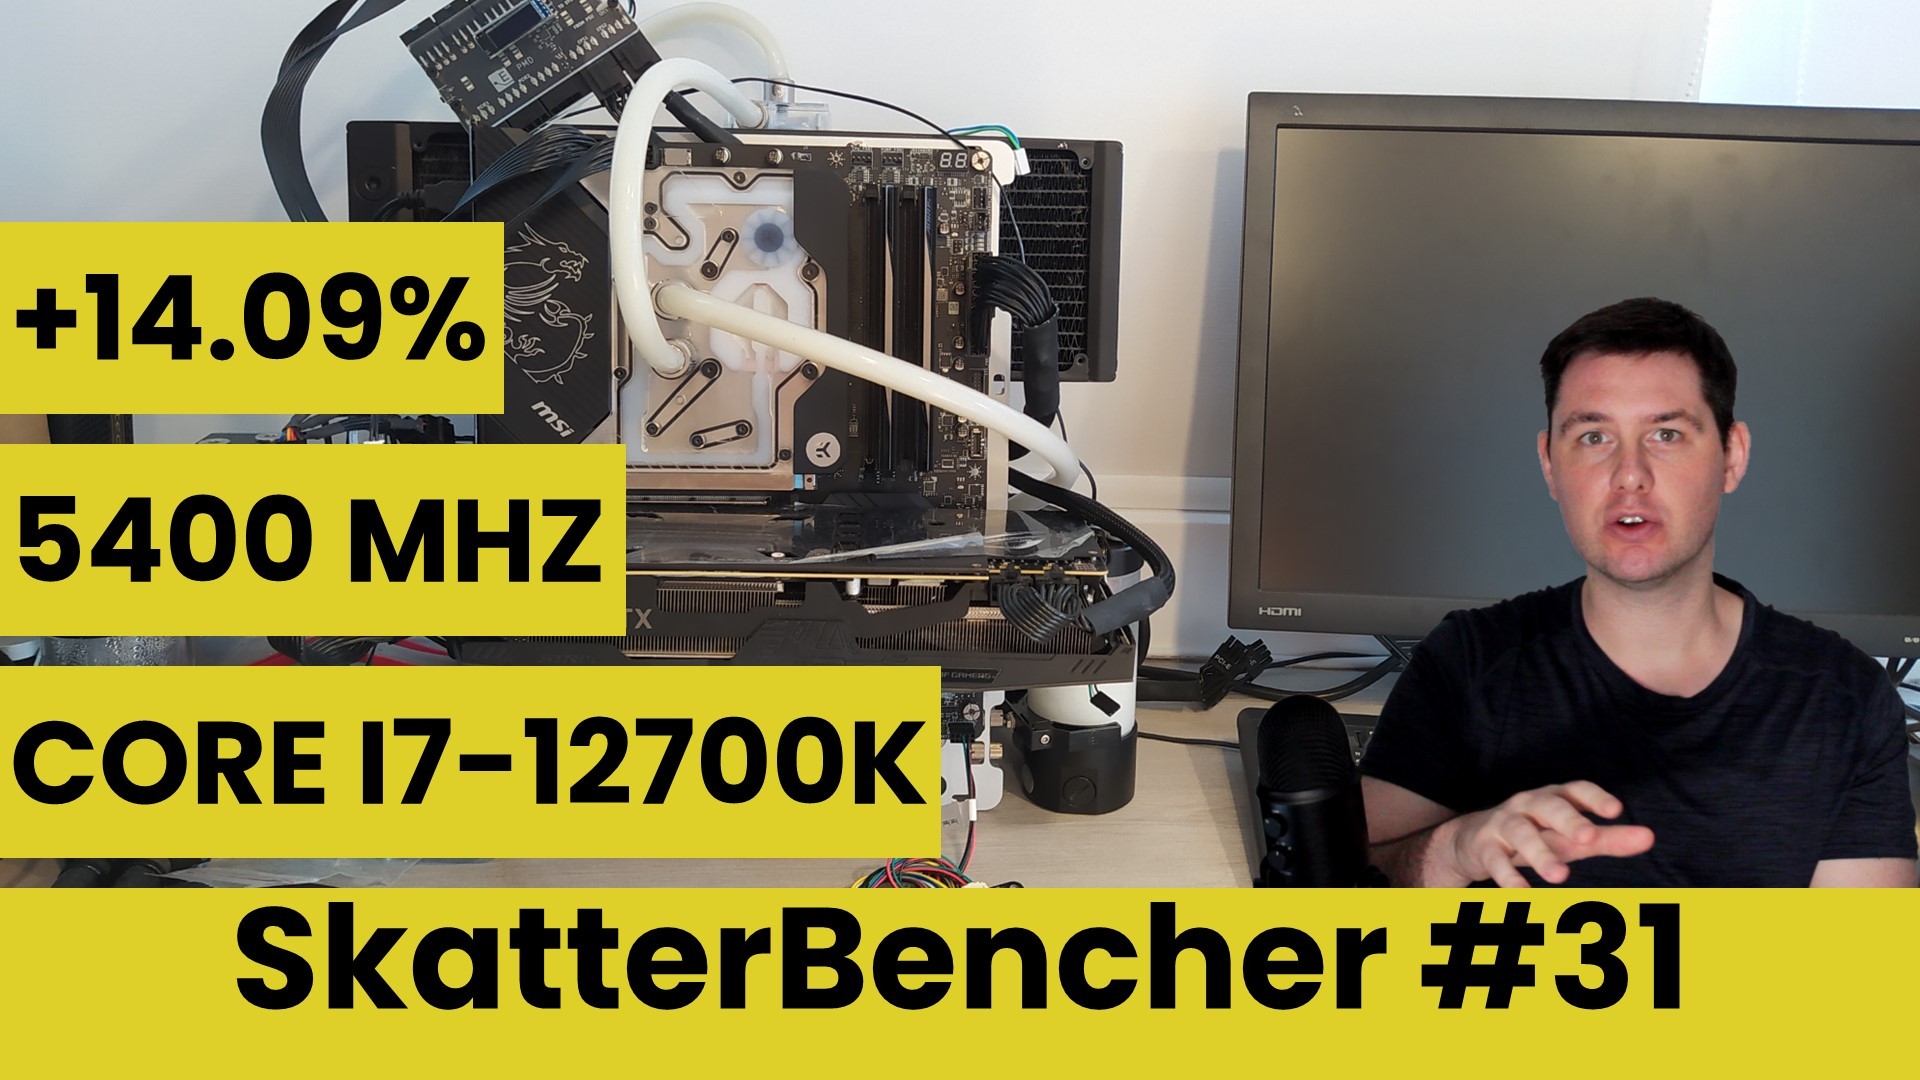 SkatterBencher #31: Intel Core i7-12700K Overclocked to 5400 MHz